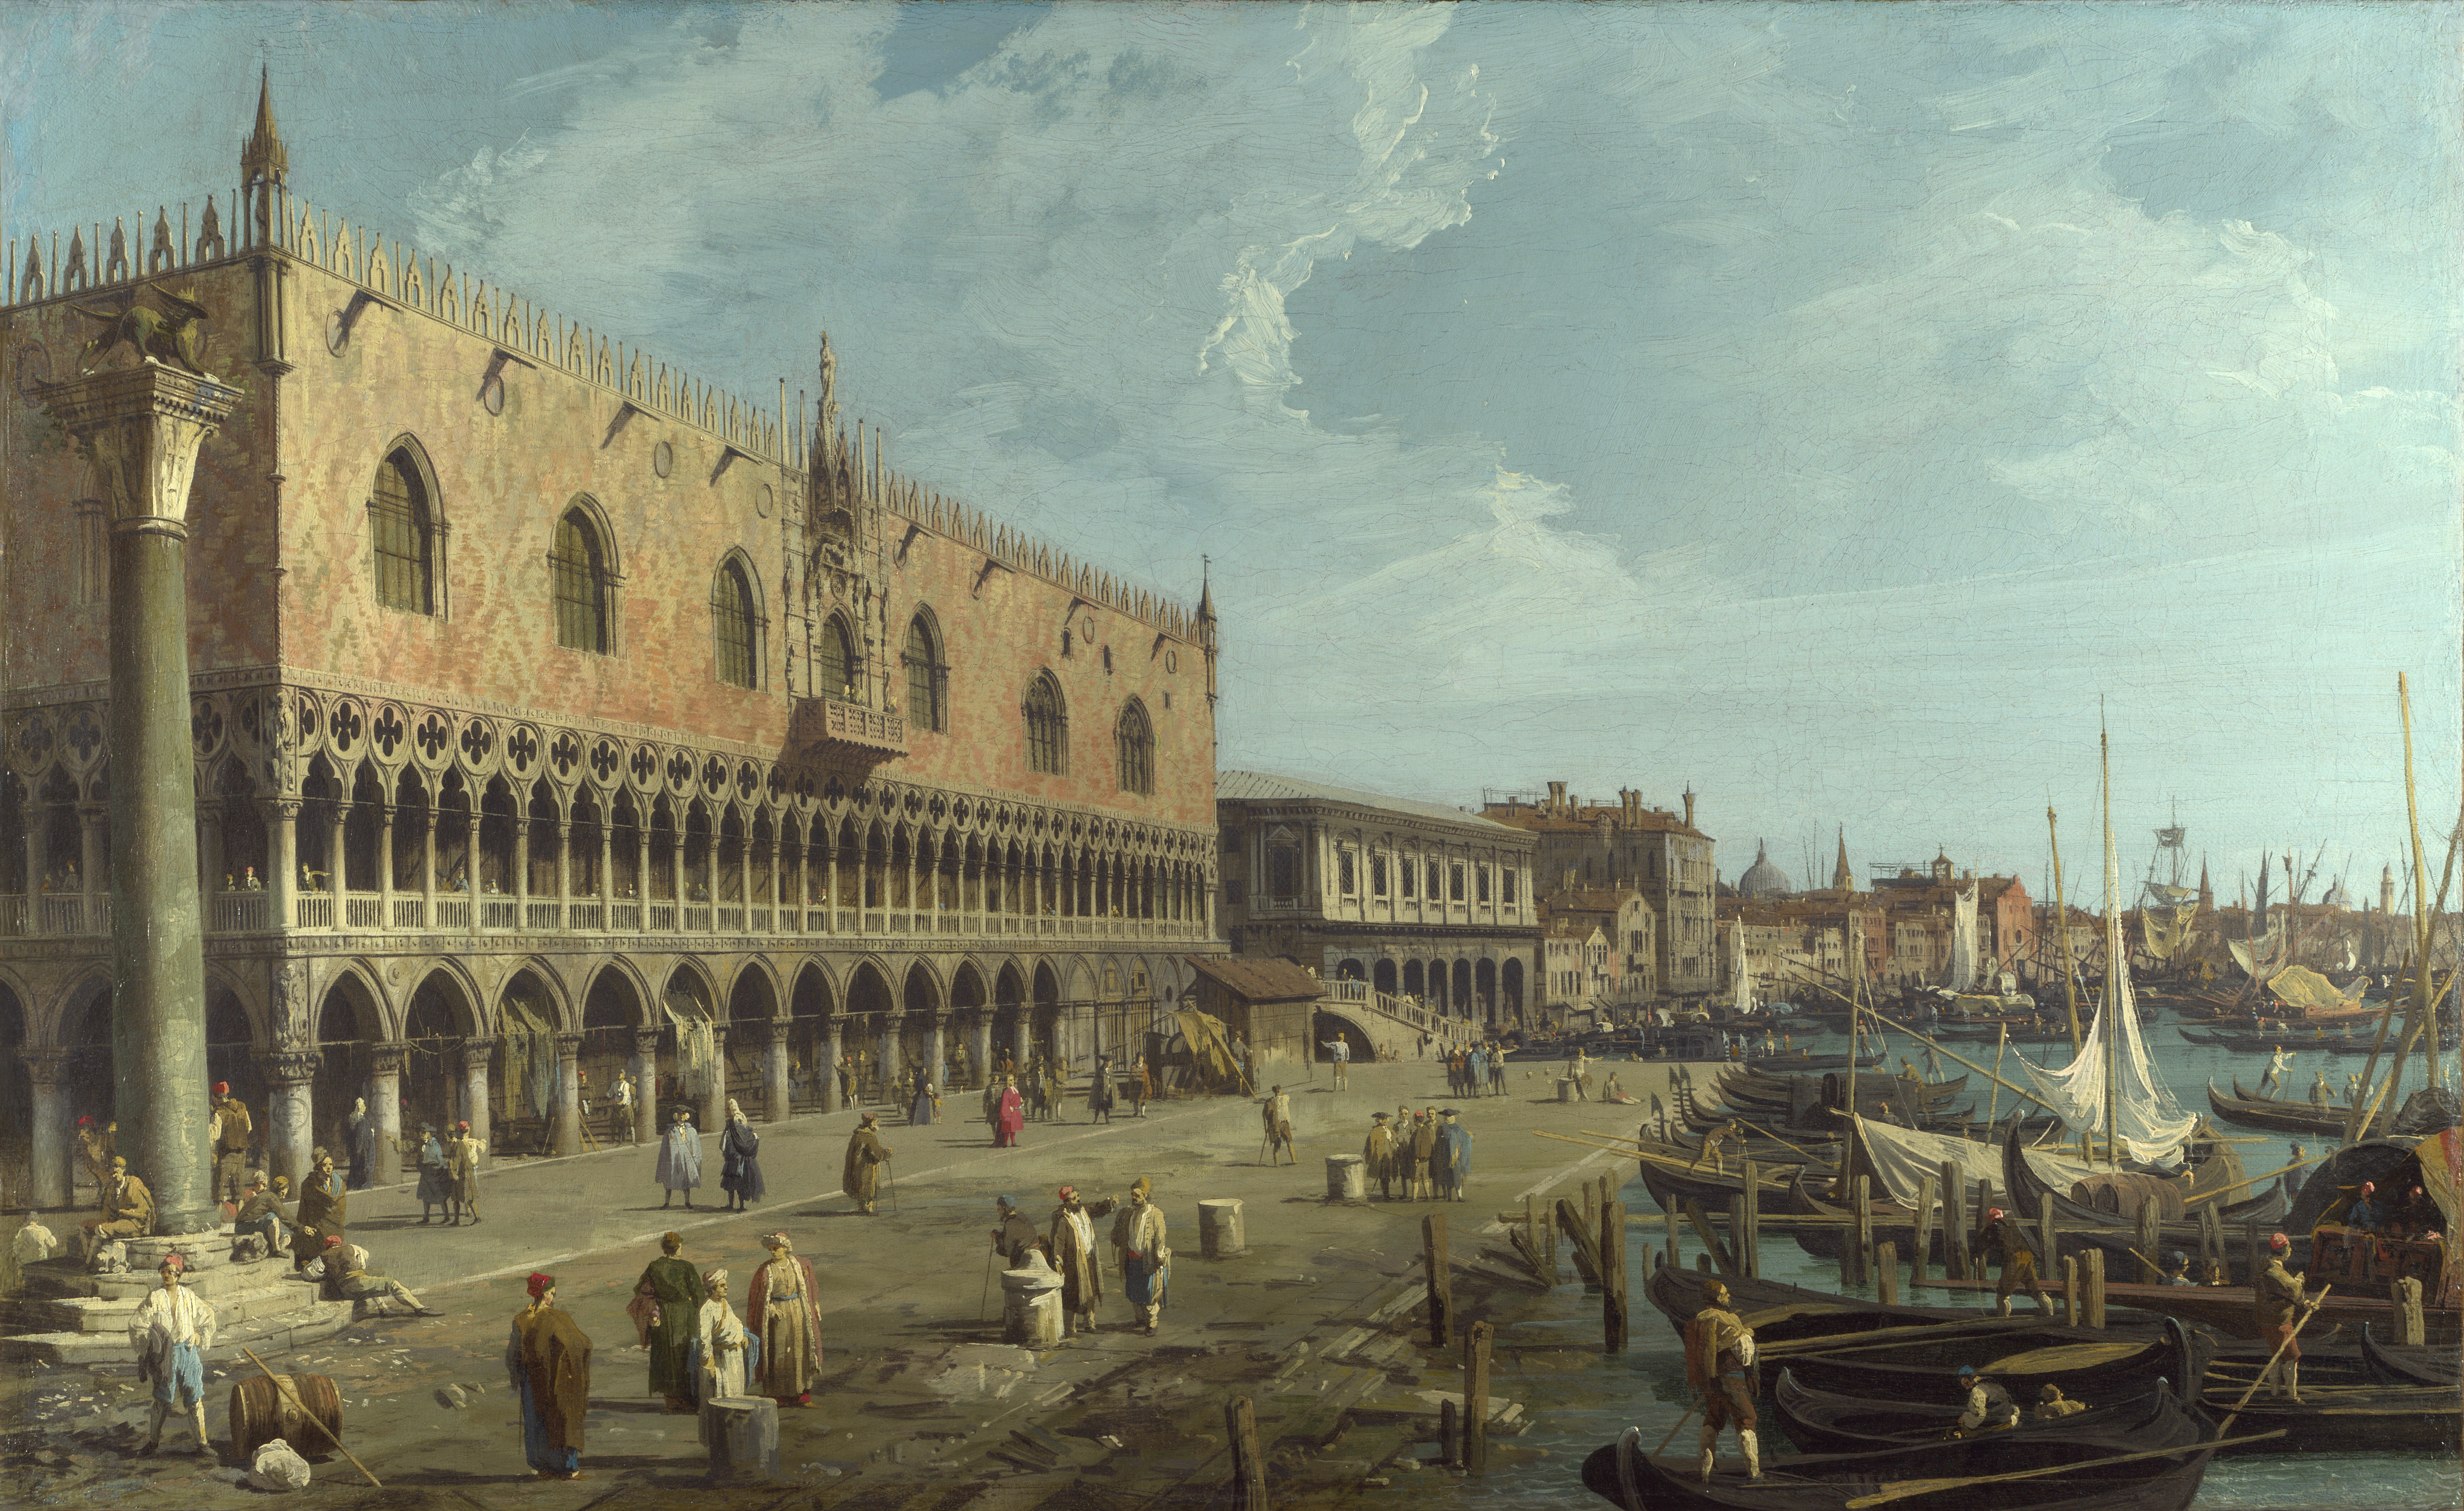 Покажи картинку веков. Каналетто дворец дожей. Джованни Антонио Каналетто Венеция. Картина Джованни Каналетто "Венеция ". Франческо Гварди дворец дожей.